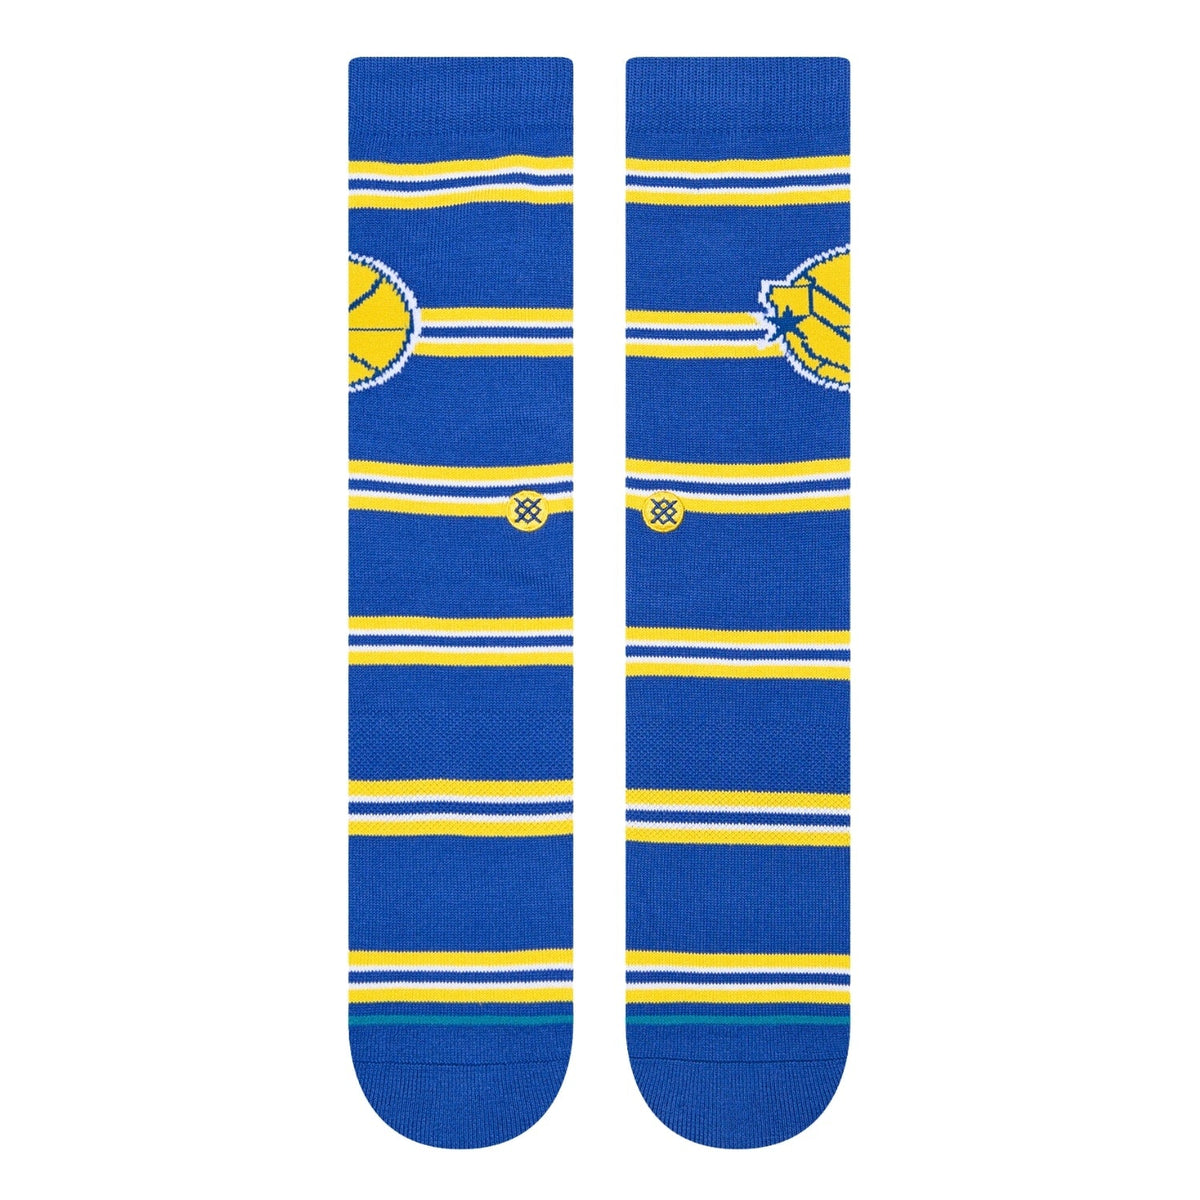 Stance Classics Warriors Socks - Blue - Mens Crew Length Socks by Stance L (UK8-12.5)